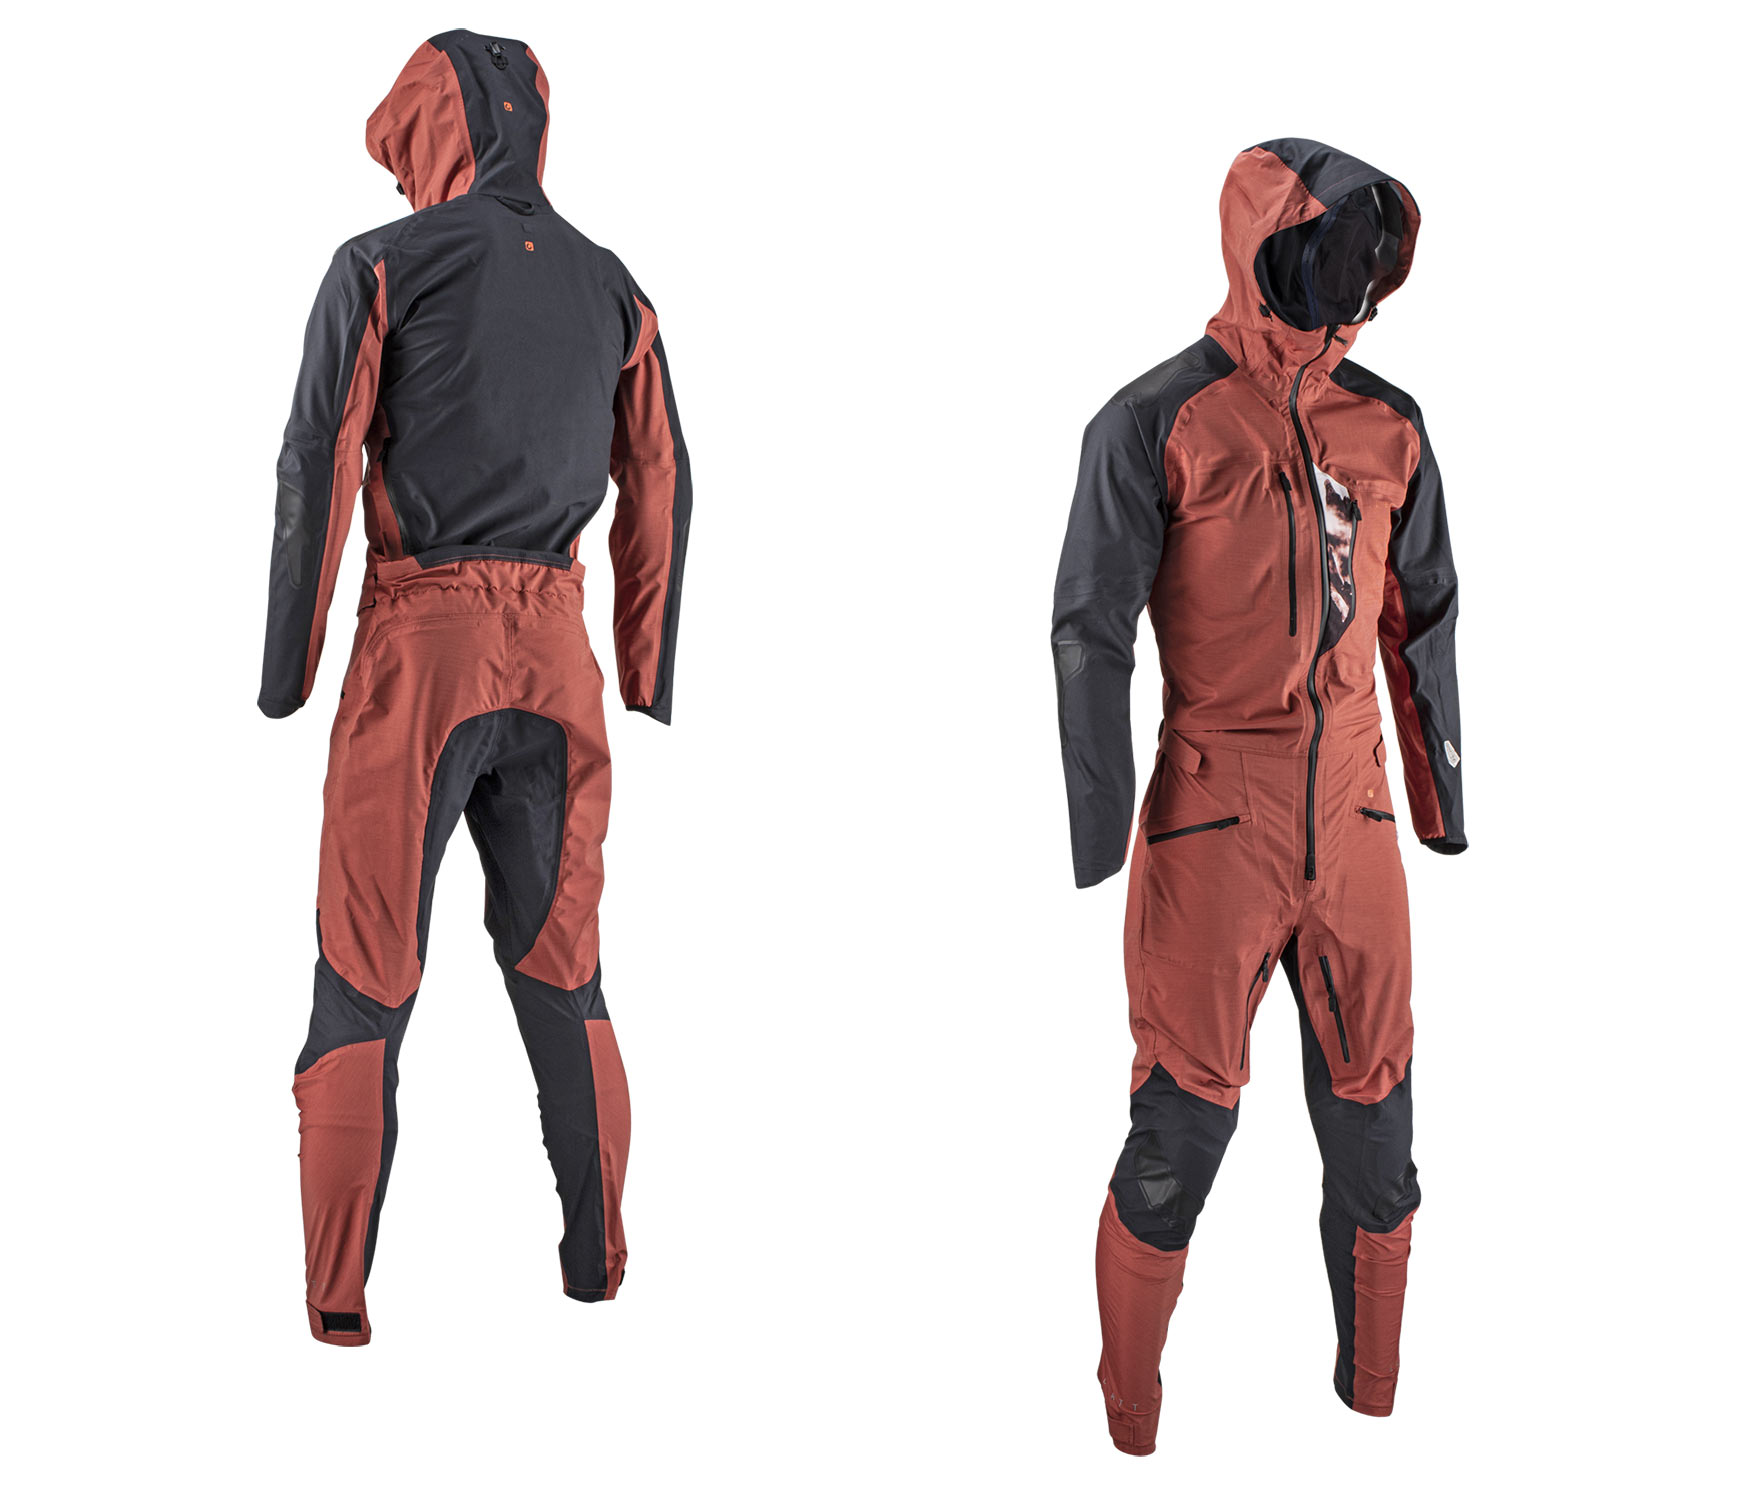 Leatt Mono Suit HydraDri foul weather riding gear